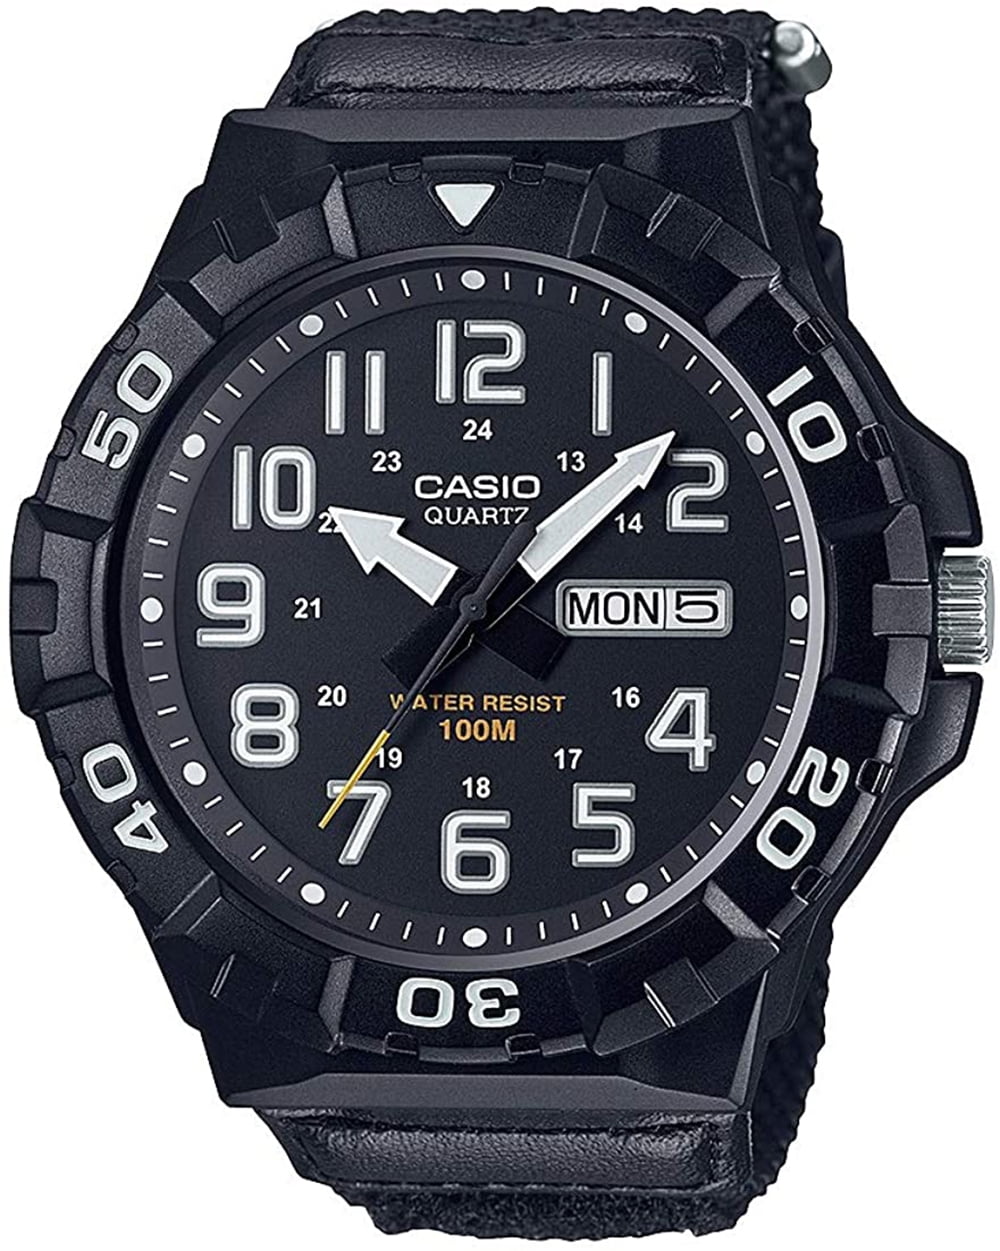 MQ24-1B | All Black Men's Analog Water Resistant Watch | CASIO